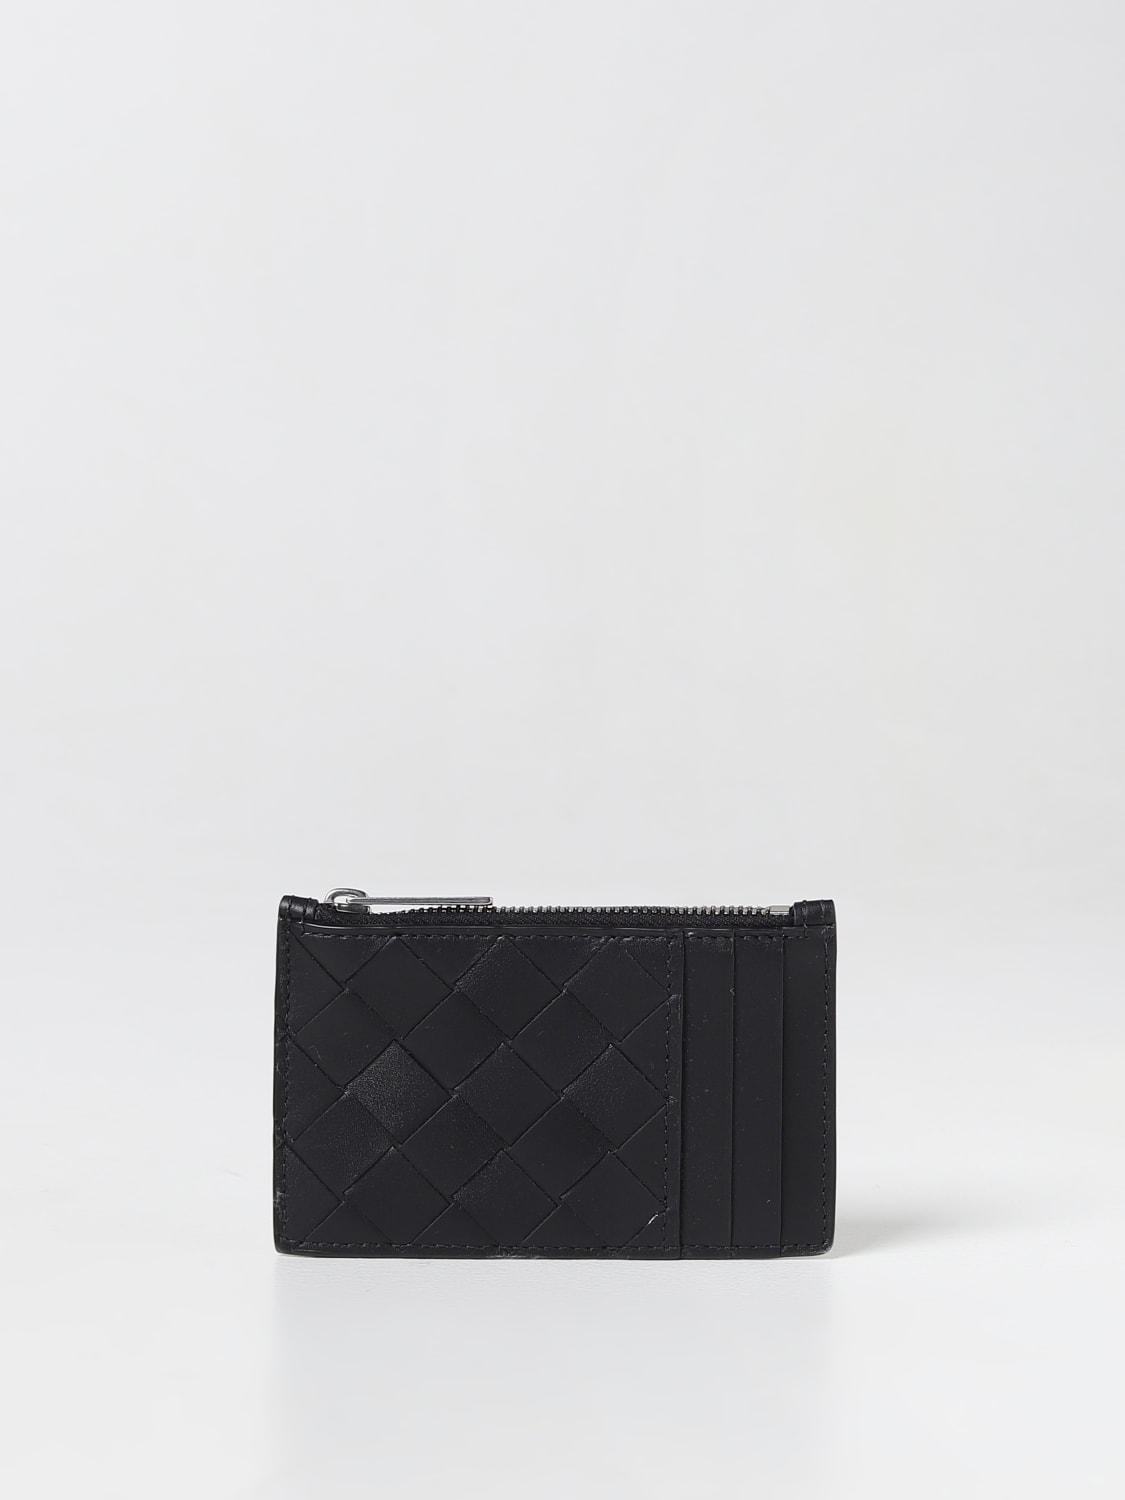 BOTTEGA VENETA: leather credit card holder - Black | Bottega Veneta ...